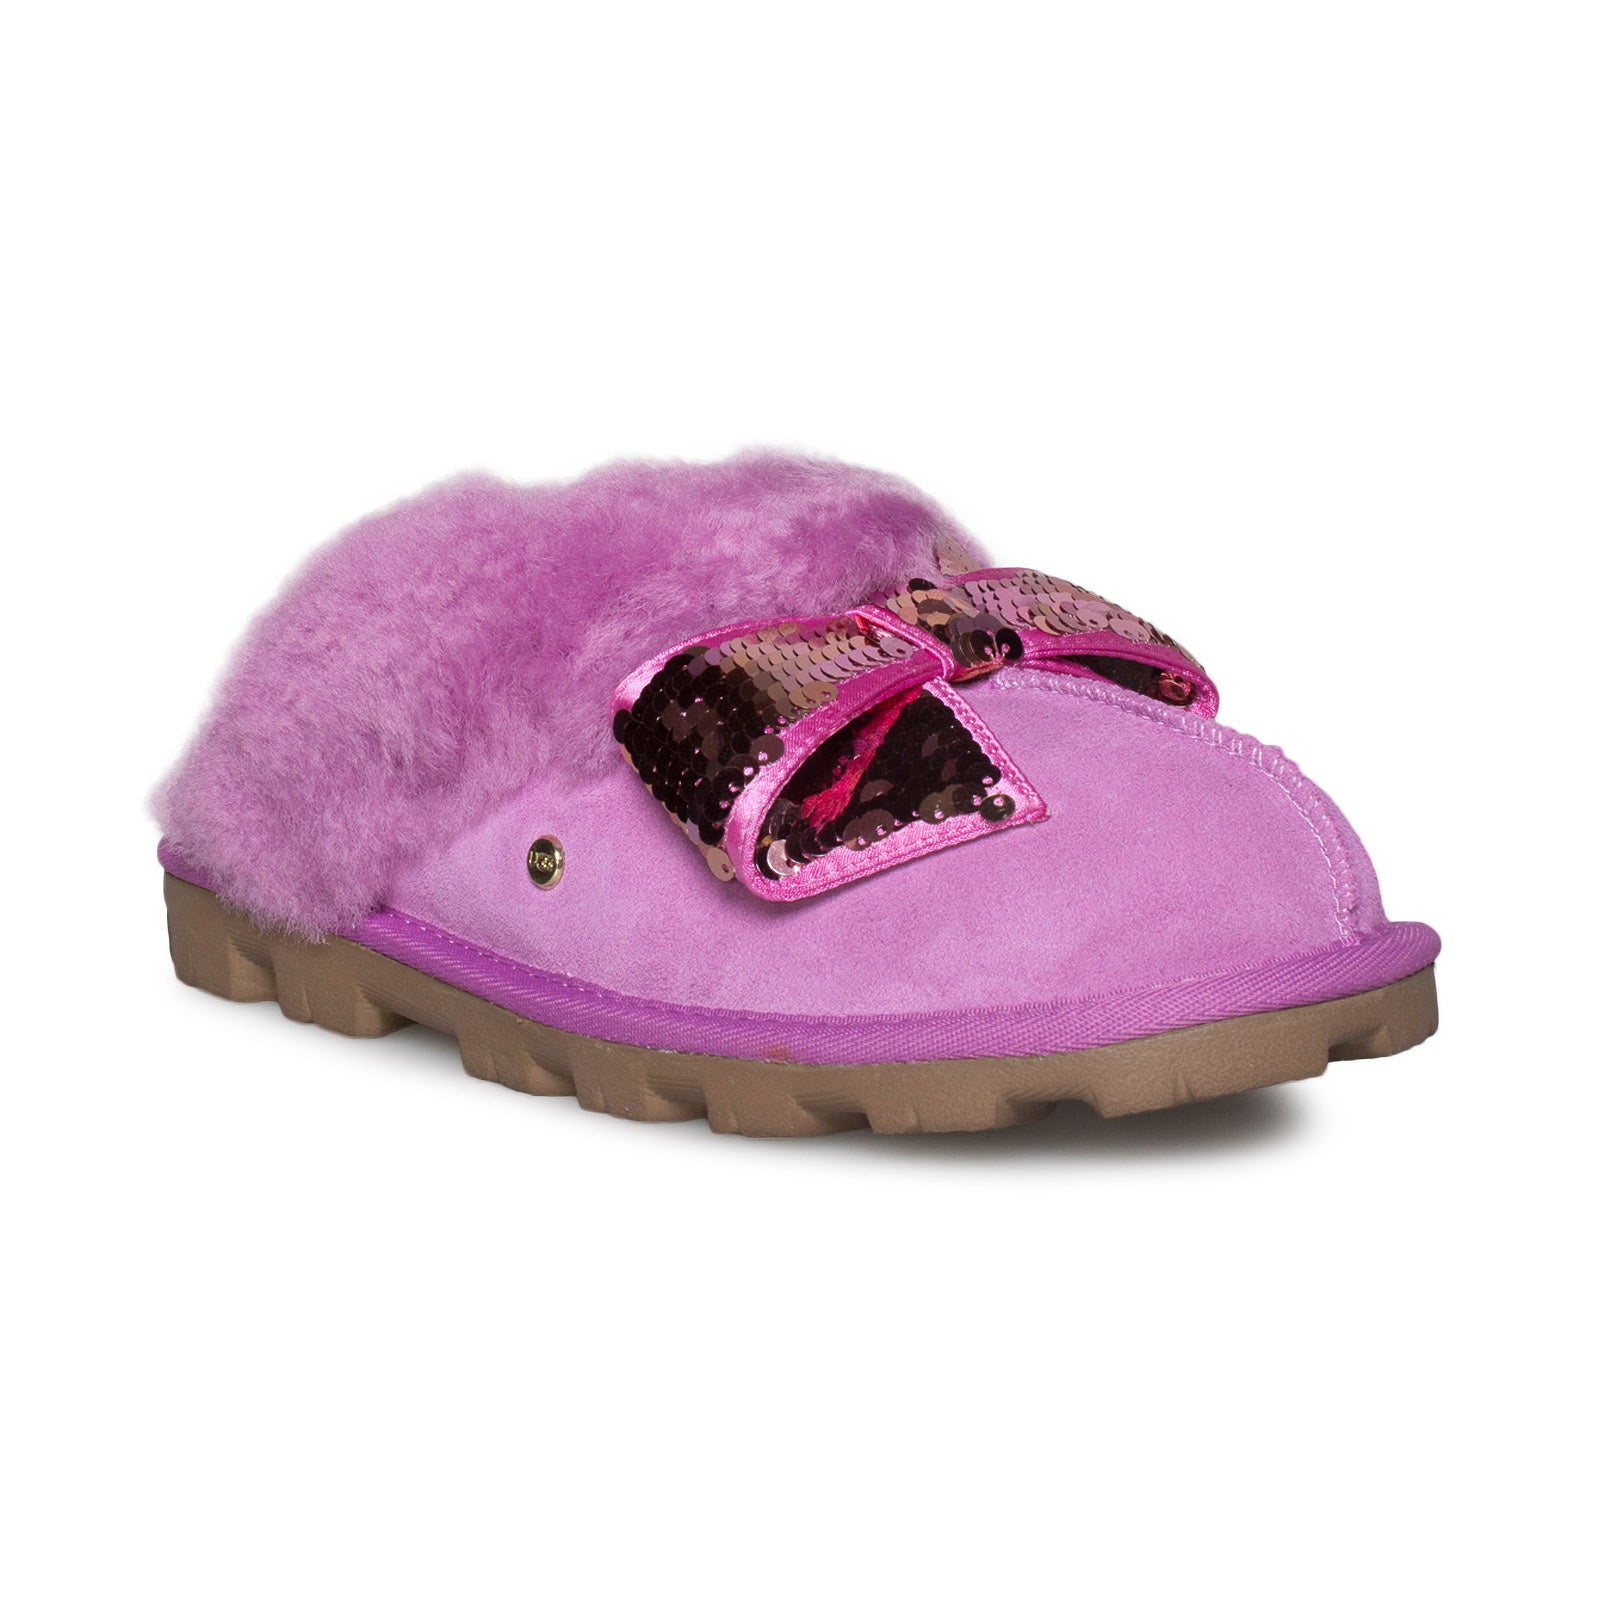 sequin ugg slippers